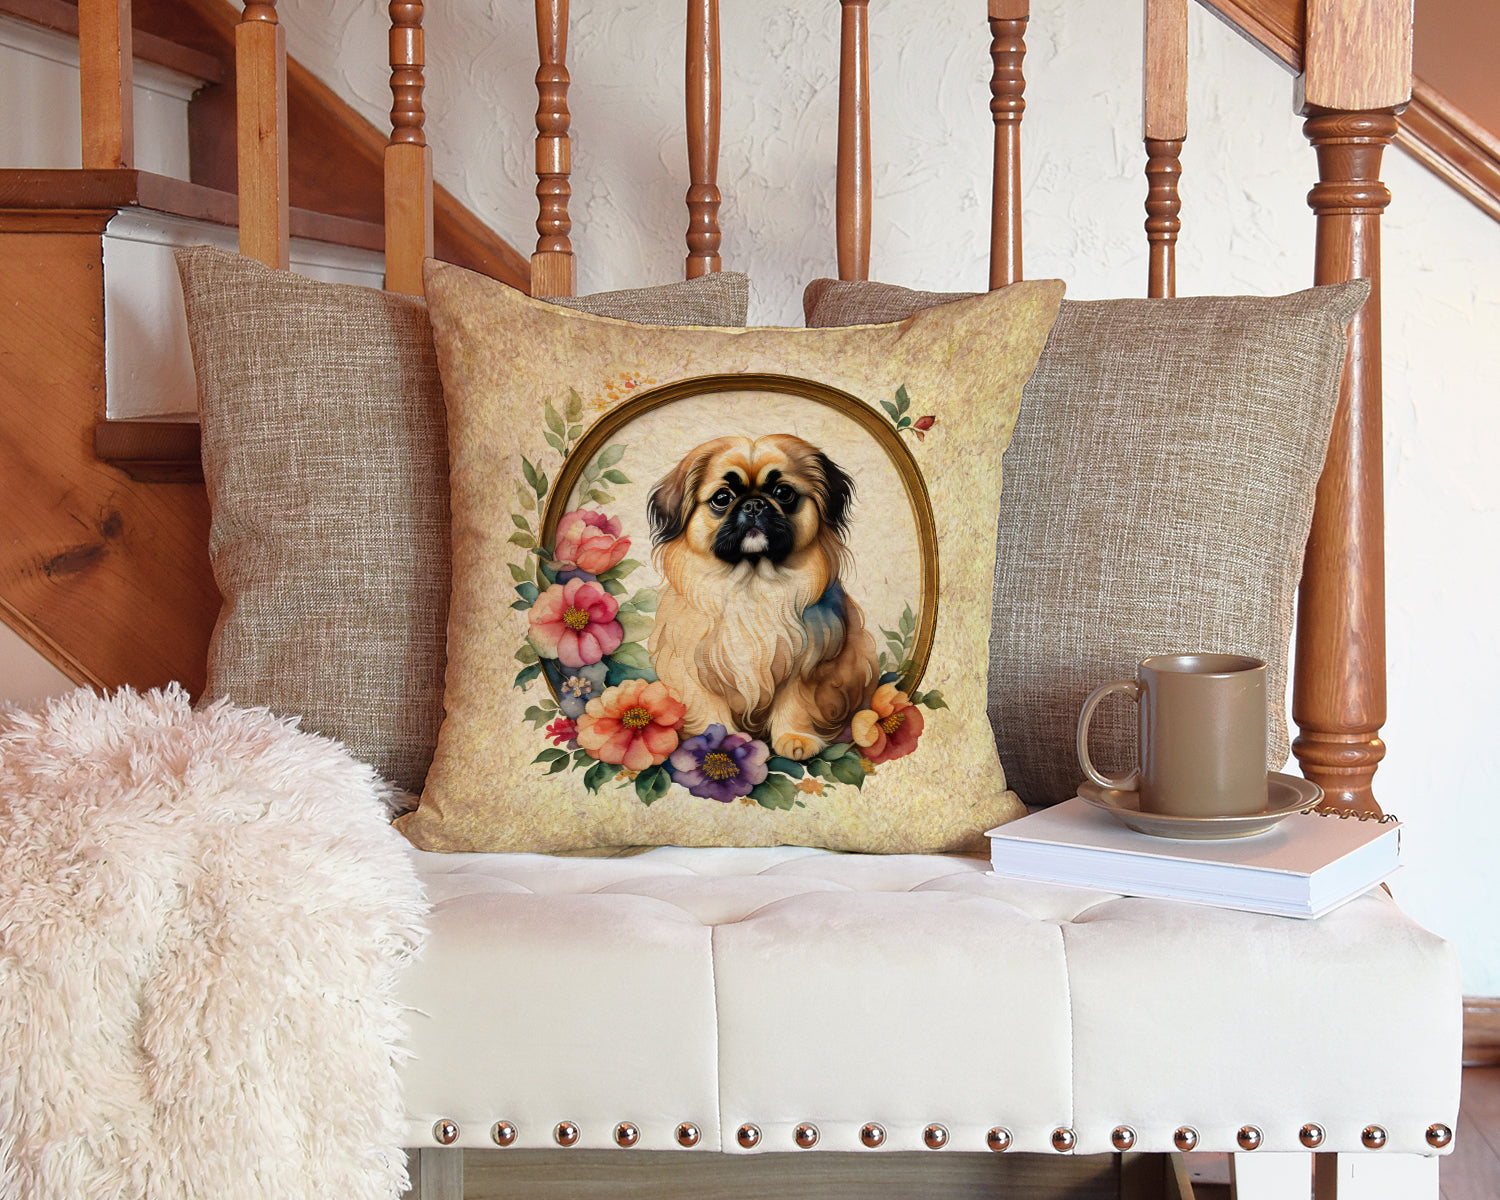 Pekingese and Flowers Fabric Decorative Pillow